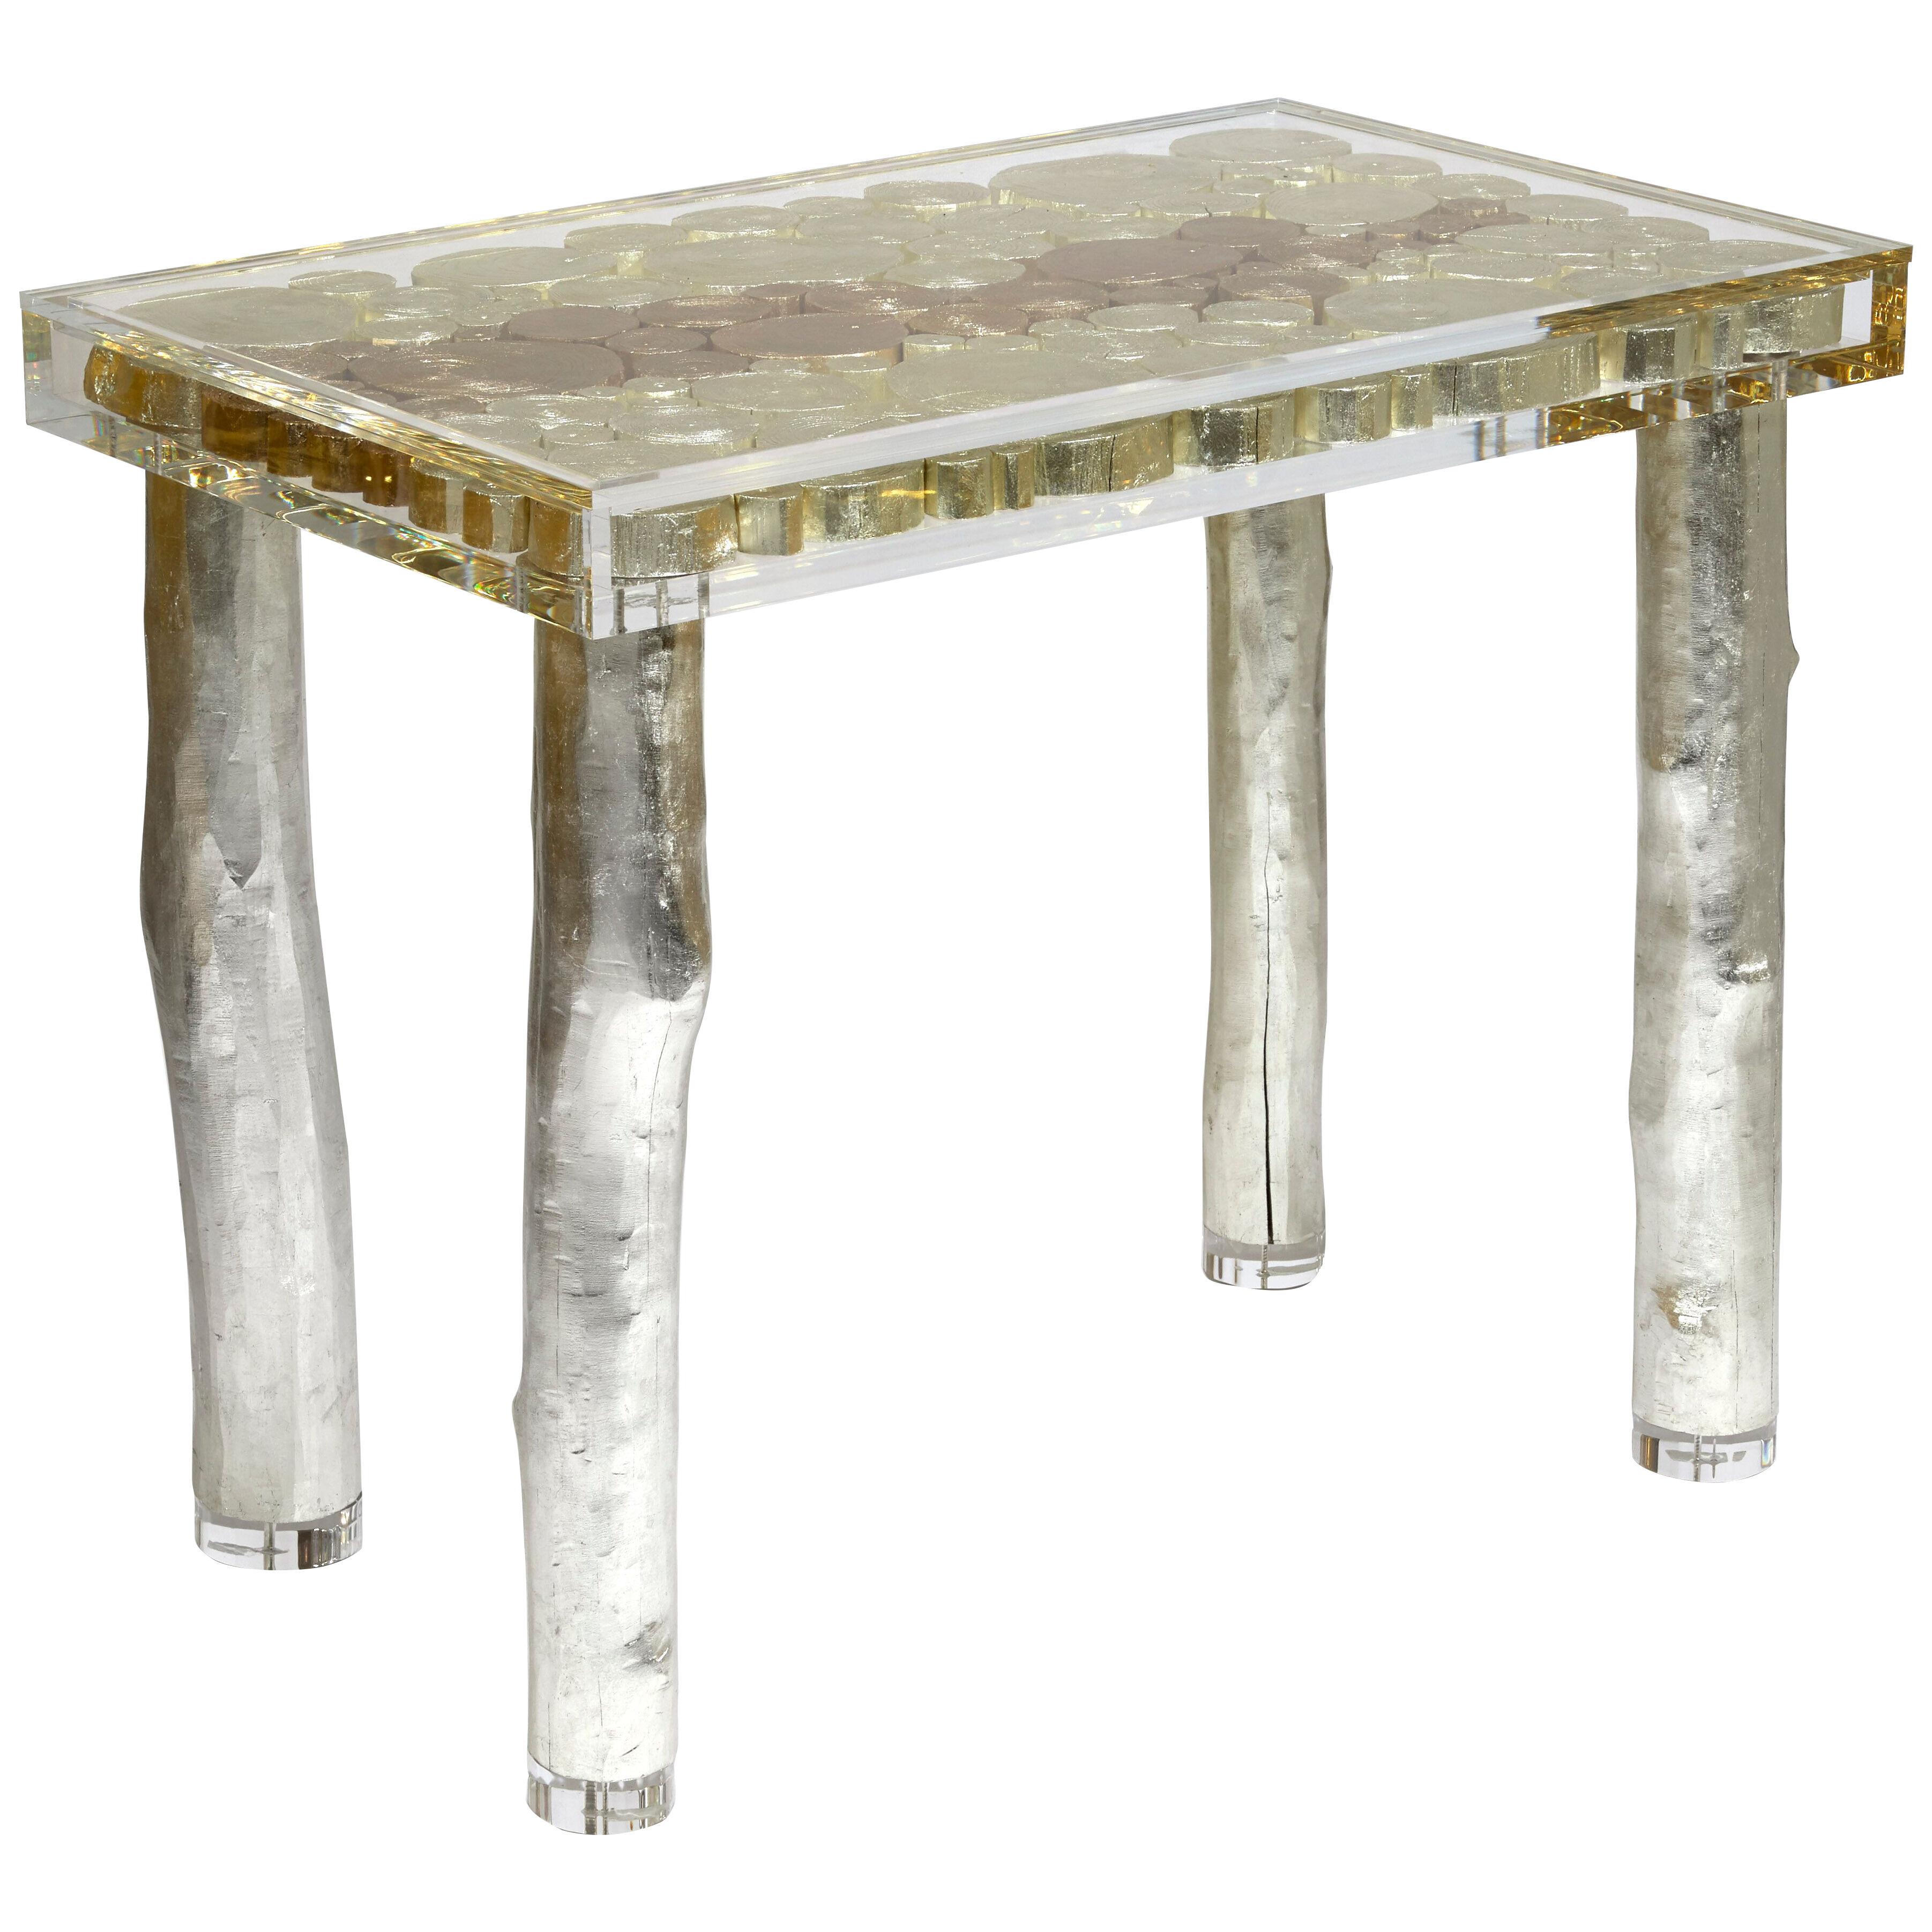 CHANGER Table. Wood. Golden leaves. Acrylic. Mattia Bonetti